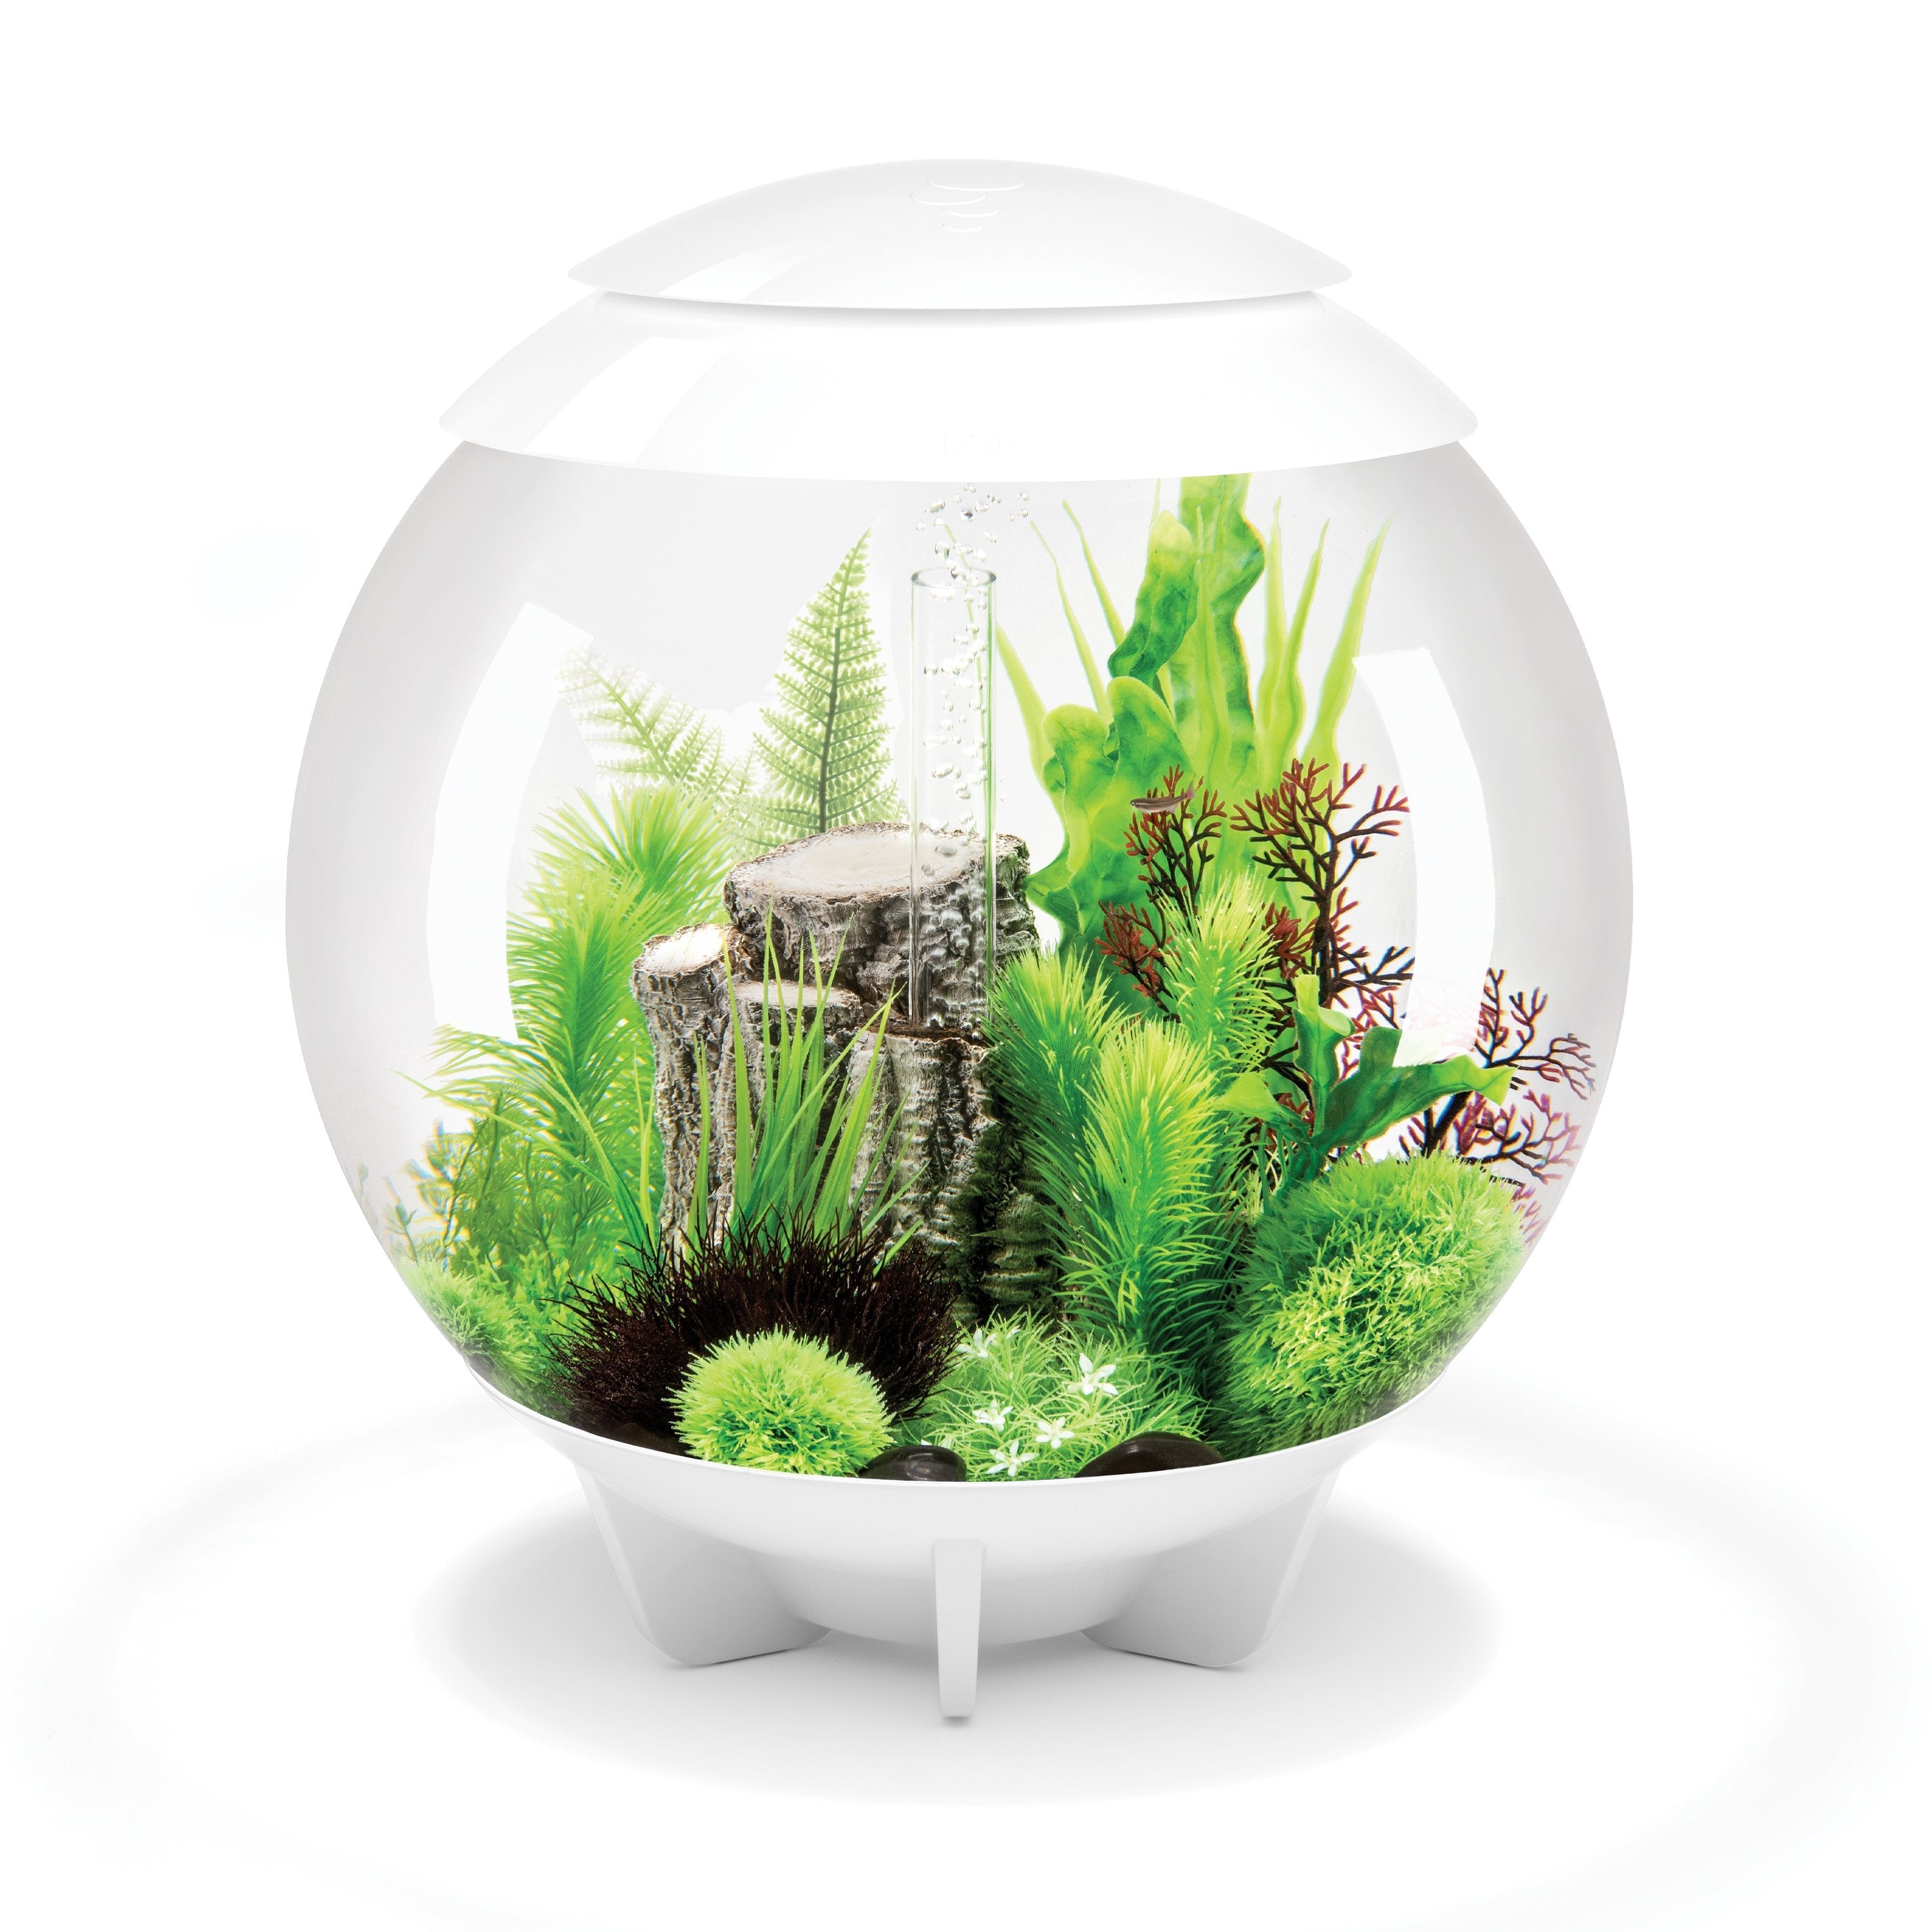 Get inspiration for your aquarium design by using the biOrb Winter Fern Aquarium Plant Set of 2